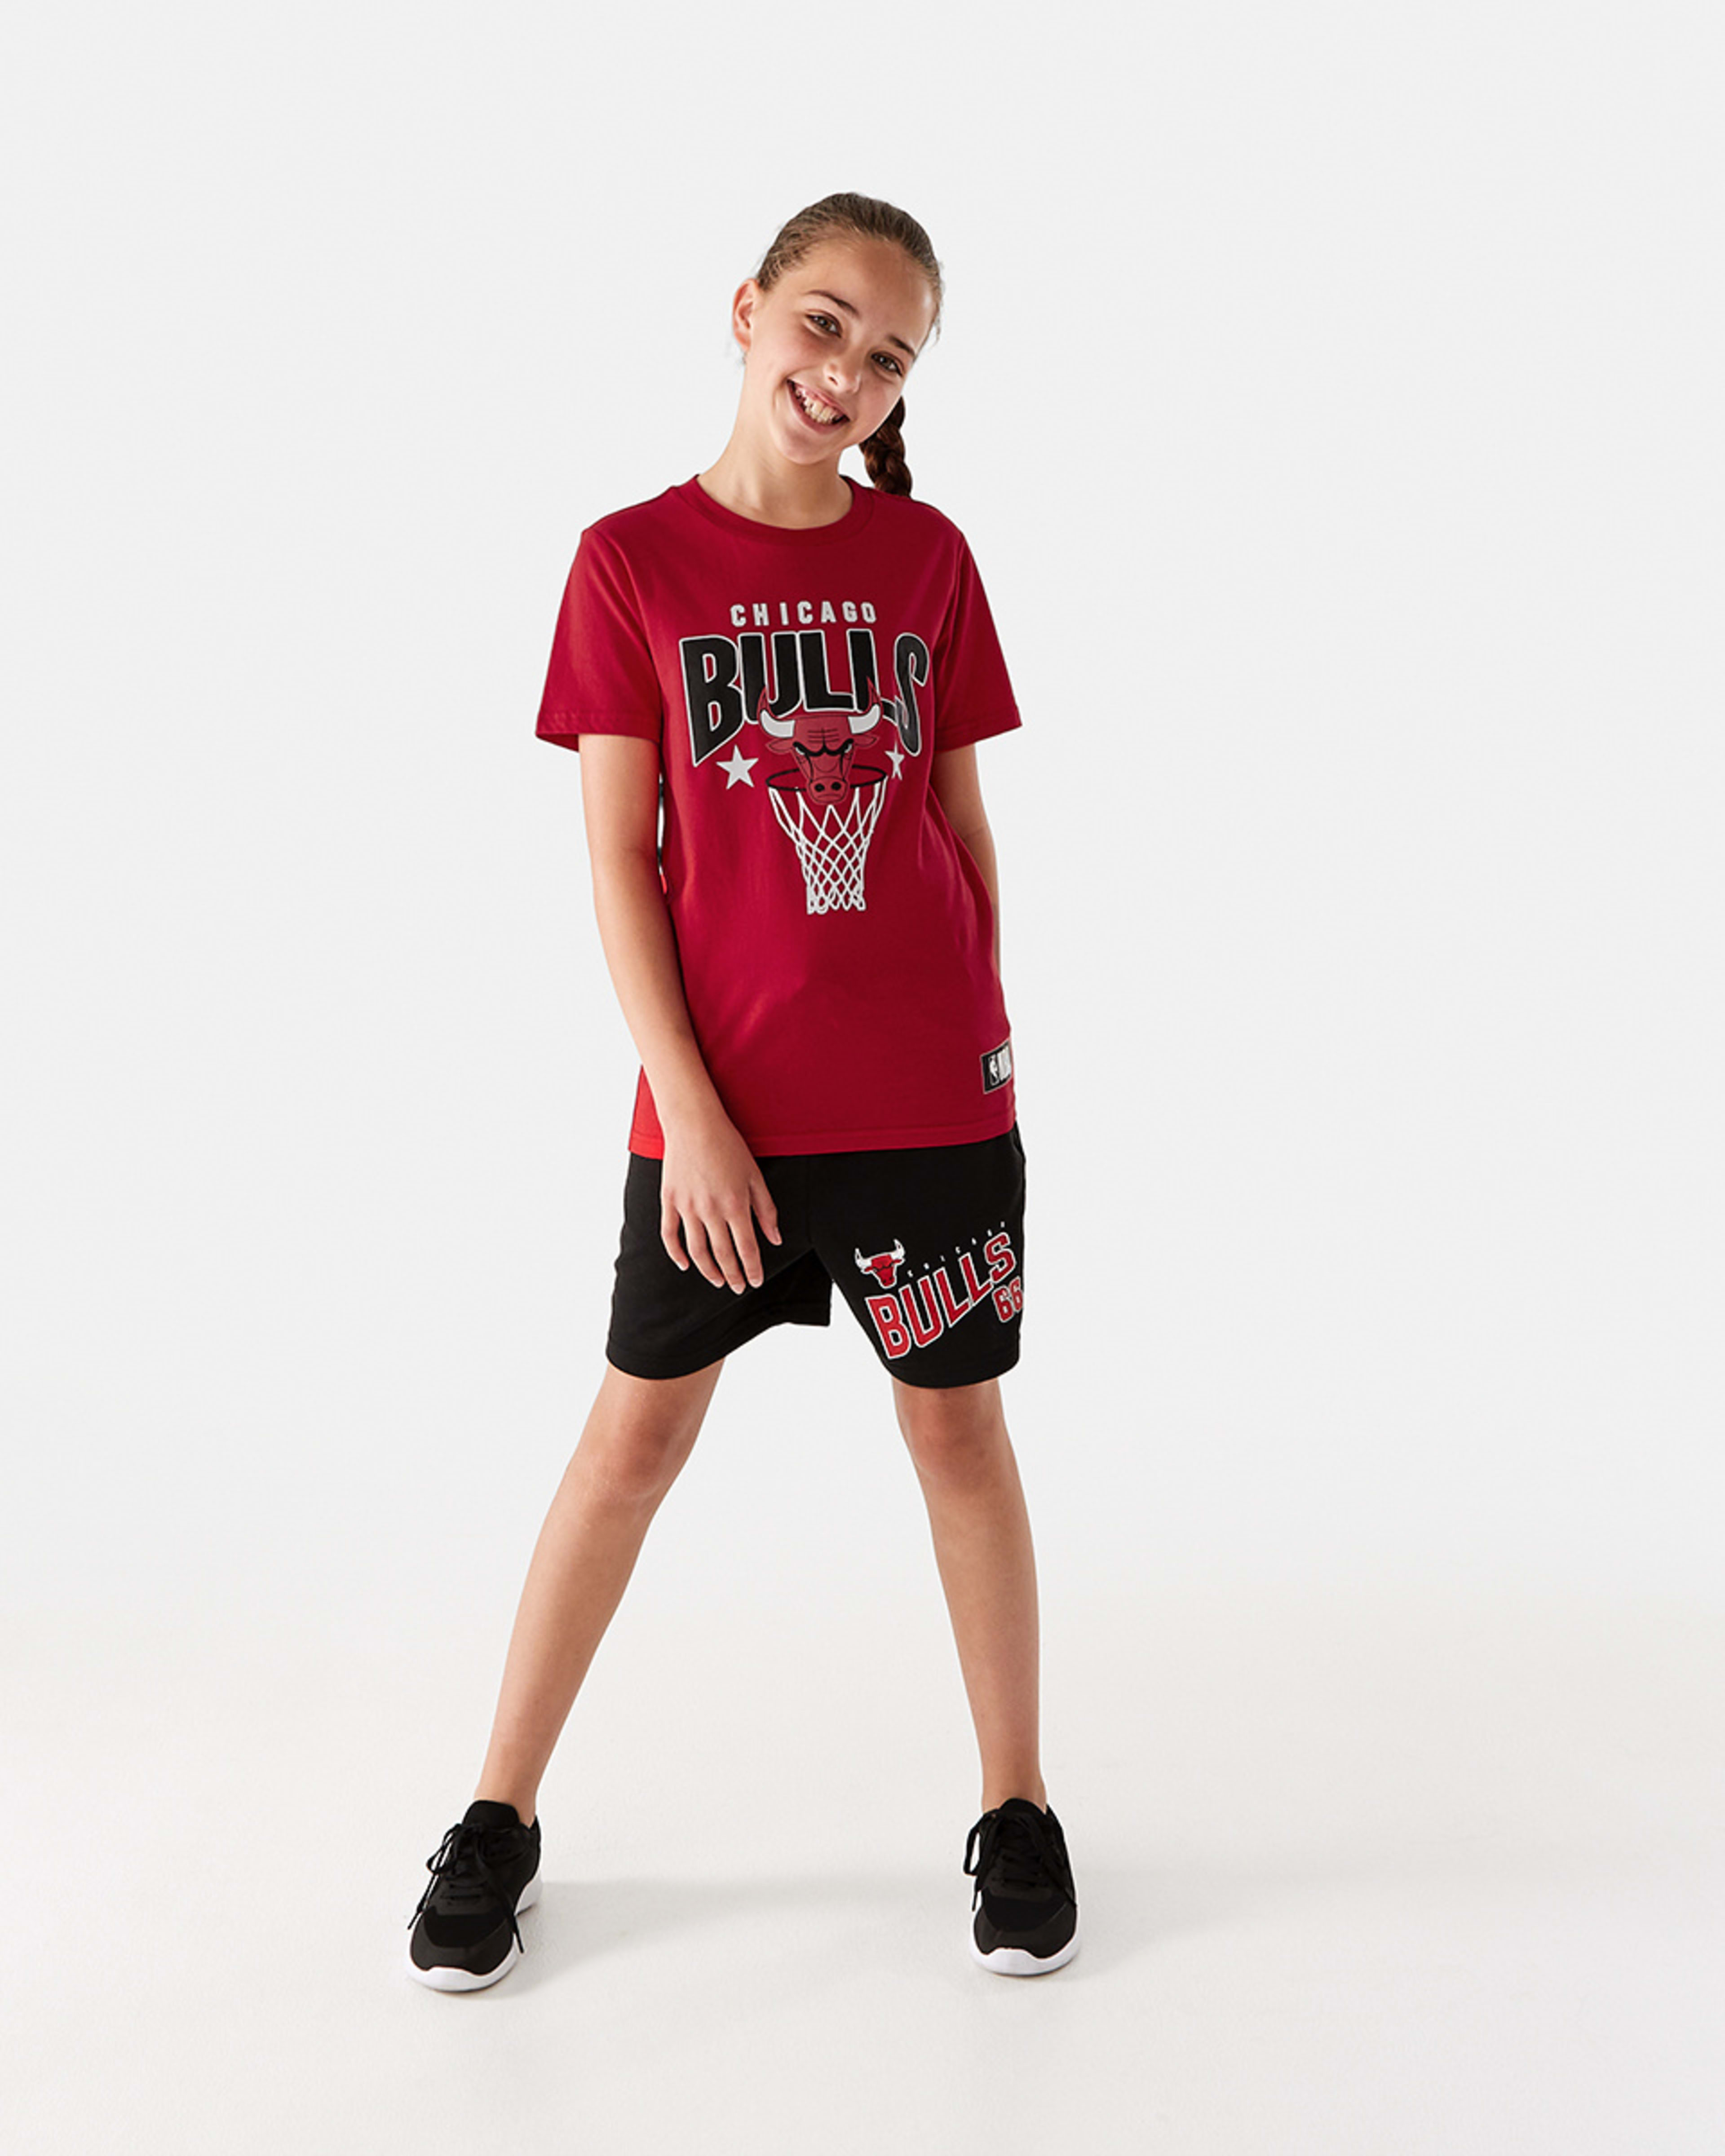 Active Kids NBA Youth Chicago Bulls Crew Neck T-shirt - Kmart